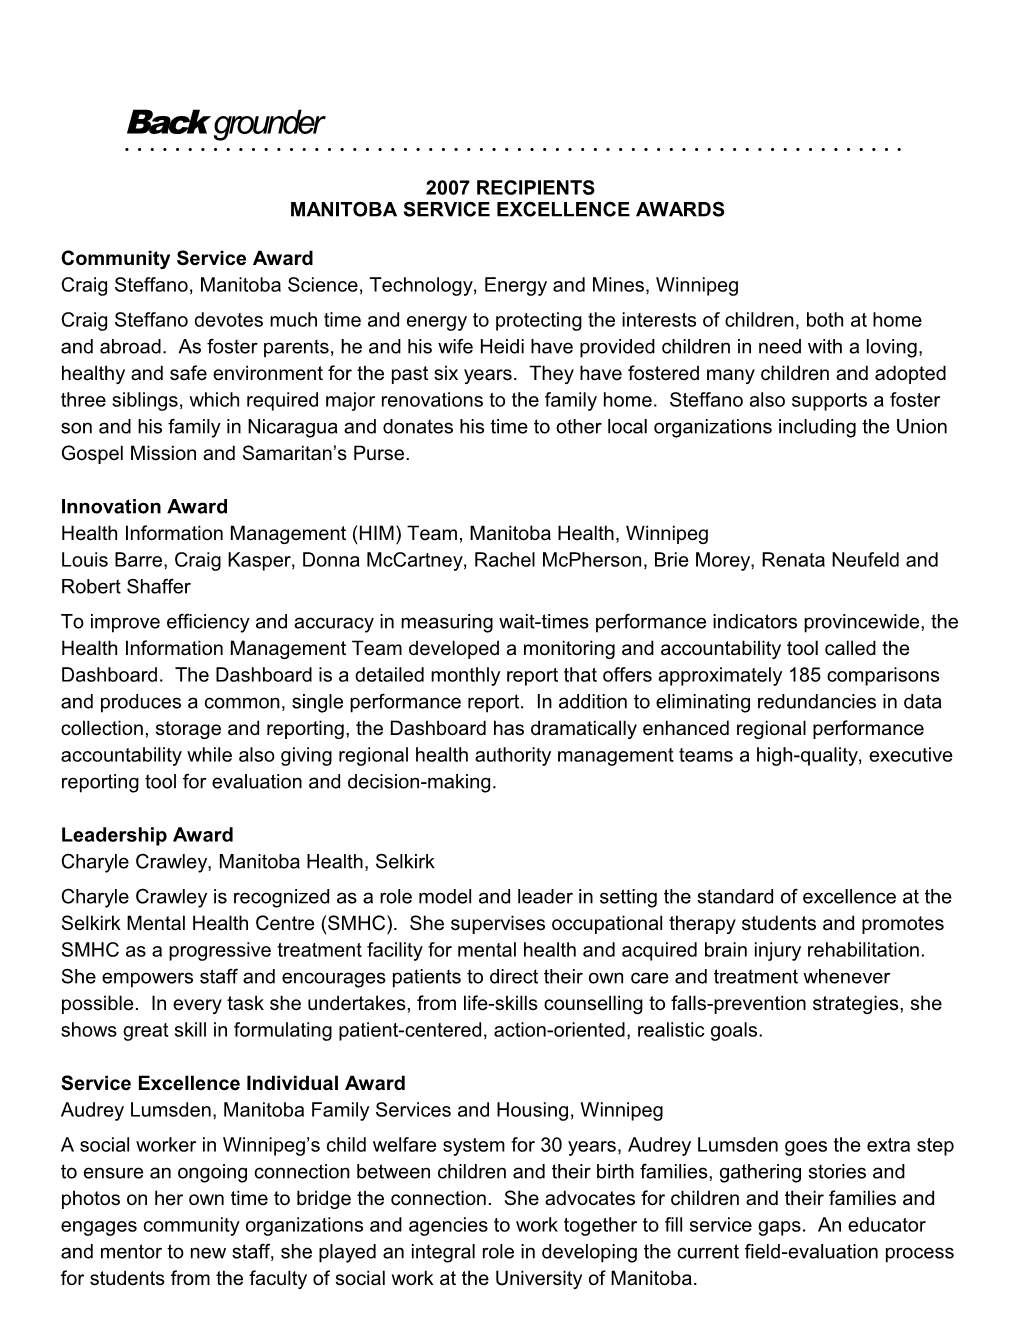 Manitoba Service Excellence Awards